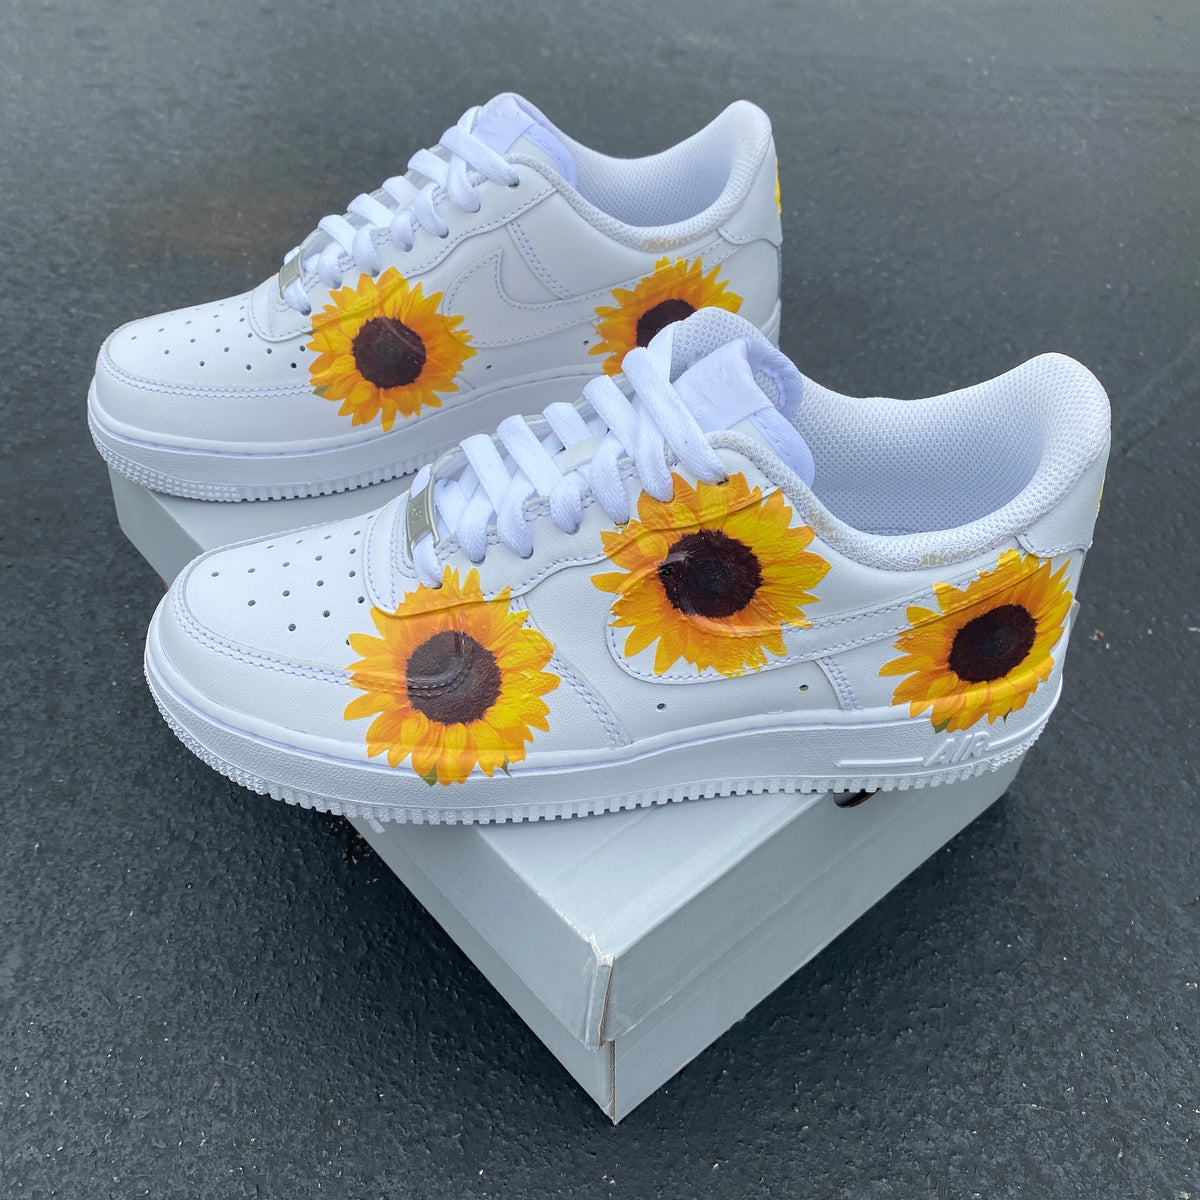 nike shoes sunflower